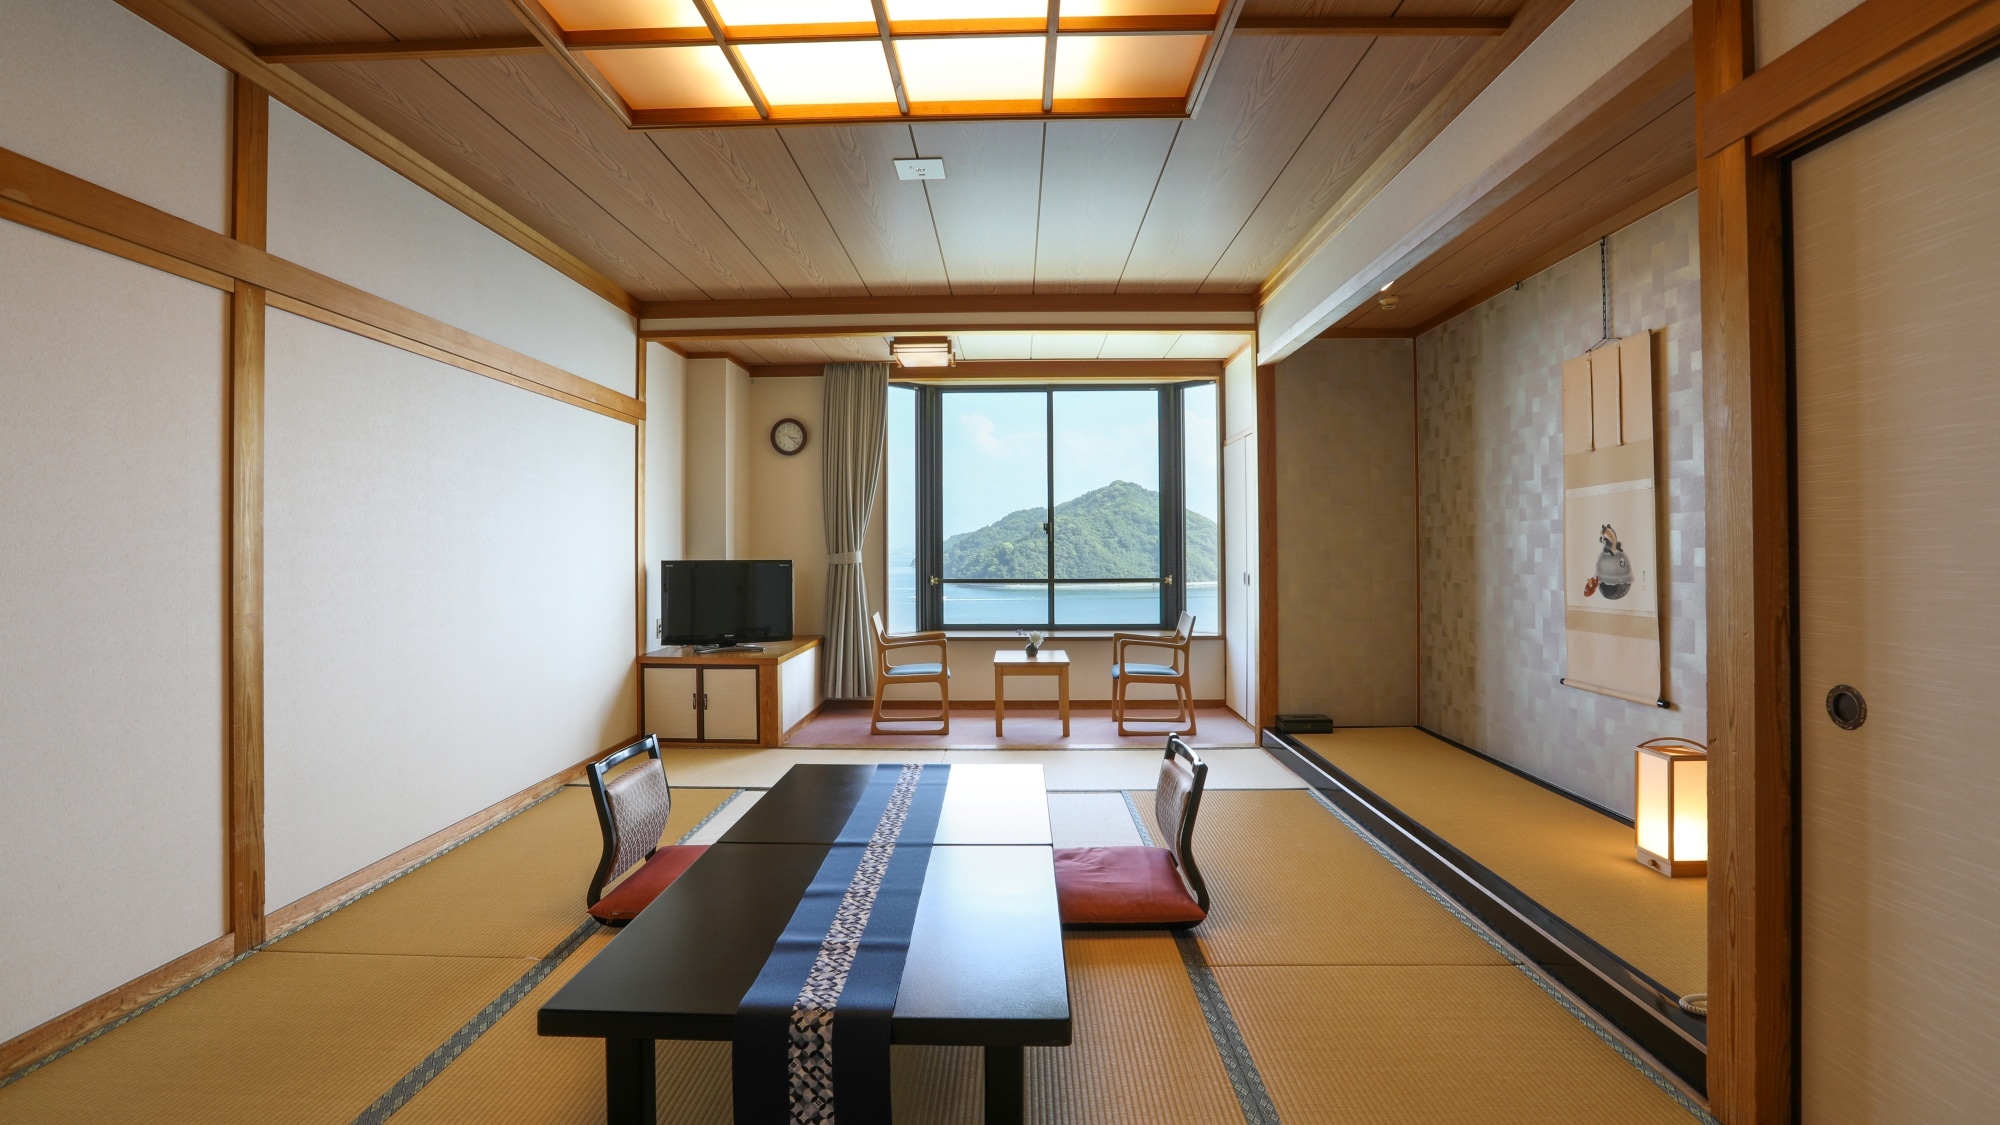 Japanese style room 12 tatami mats